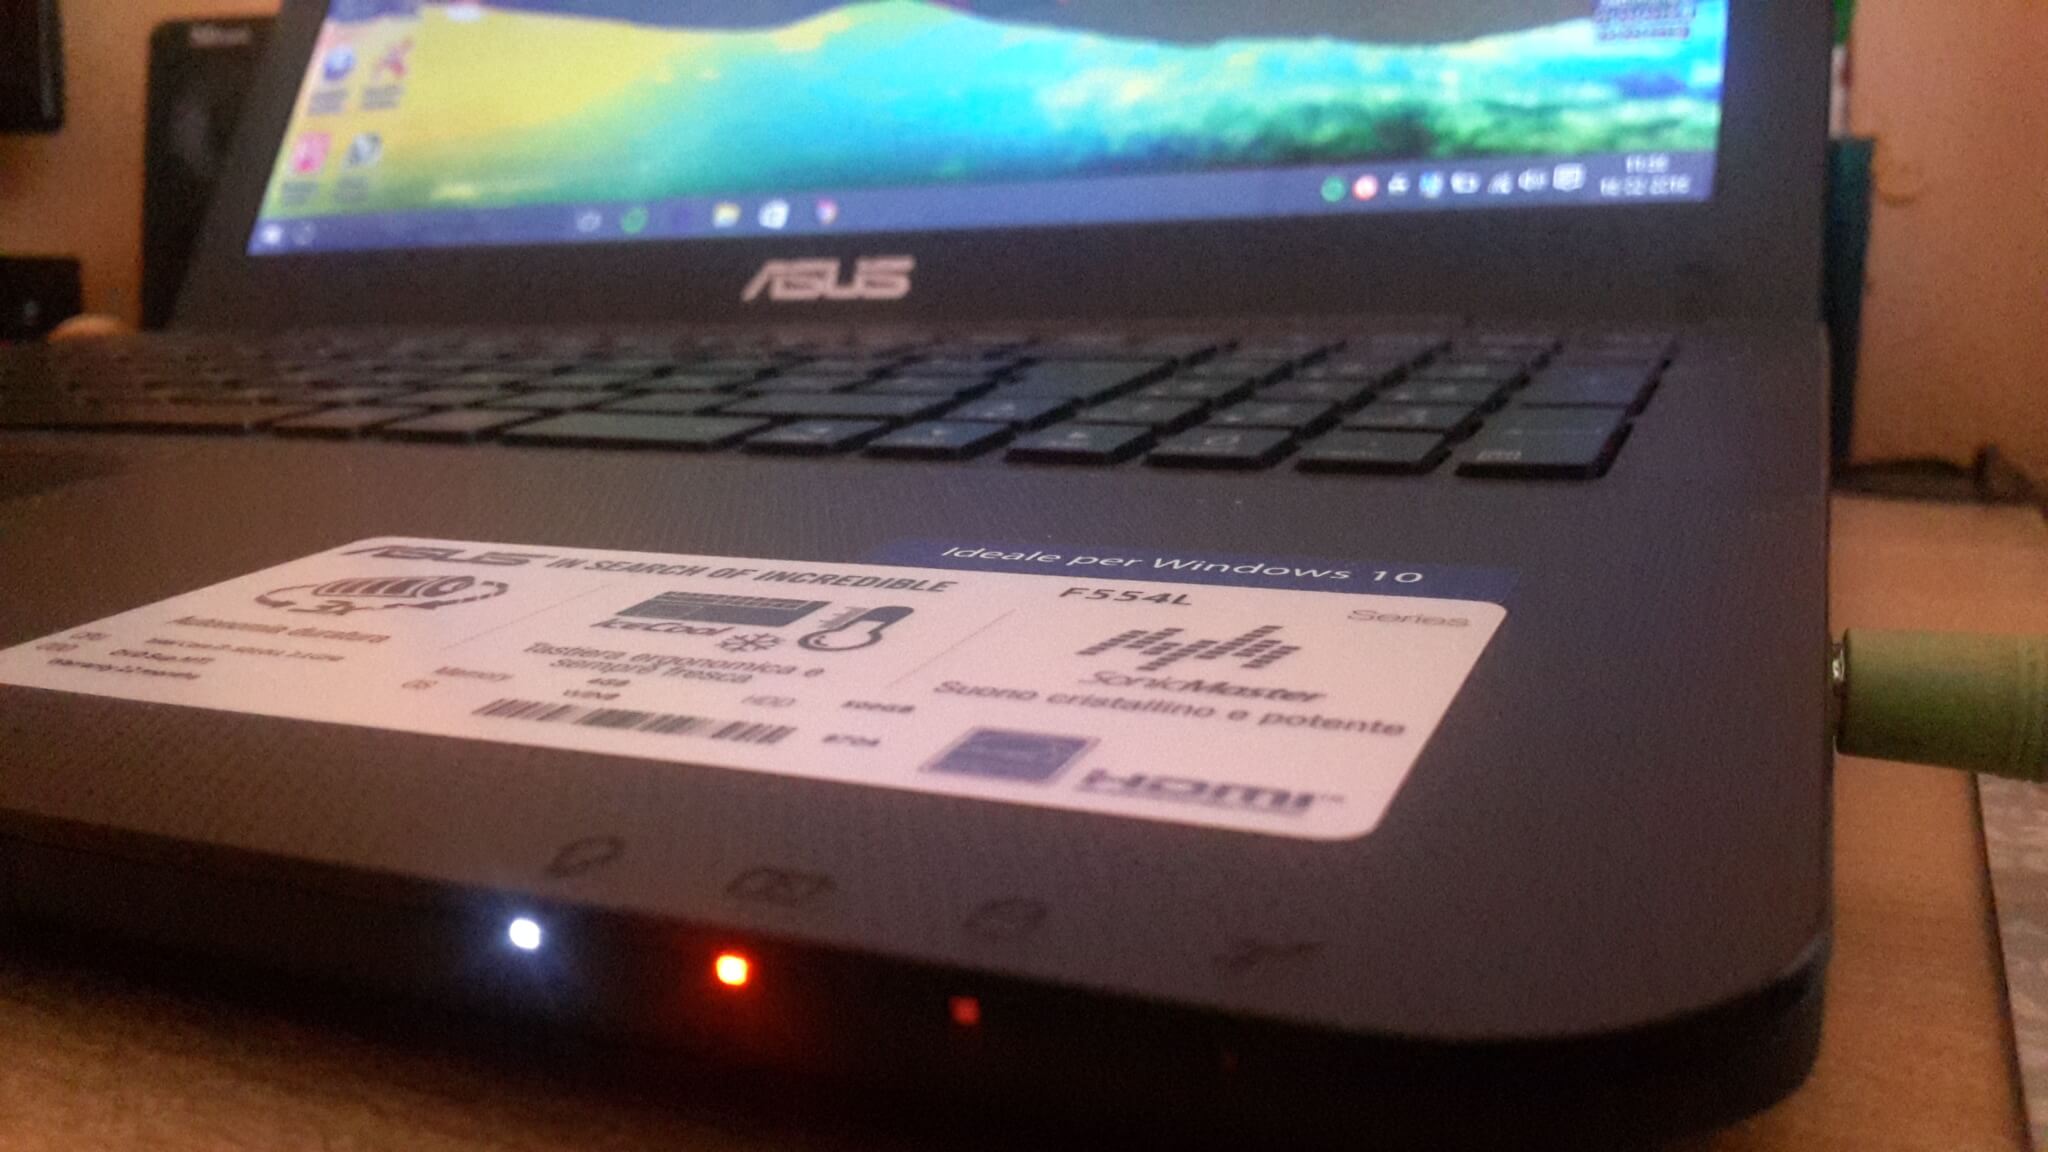 (USED) ASUS F554LP5200 i5-5200U 4G NA 500G AMD R5 M320 2G 15.6" 1366x768 Entry Gaming Laptop 90% - C2 Computer